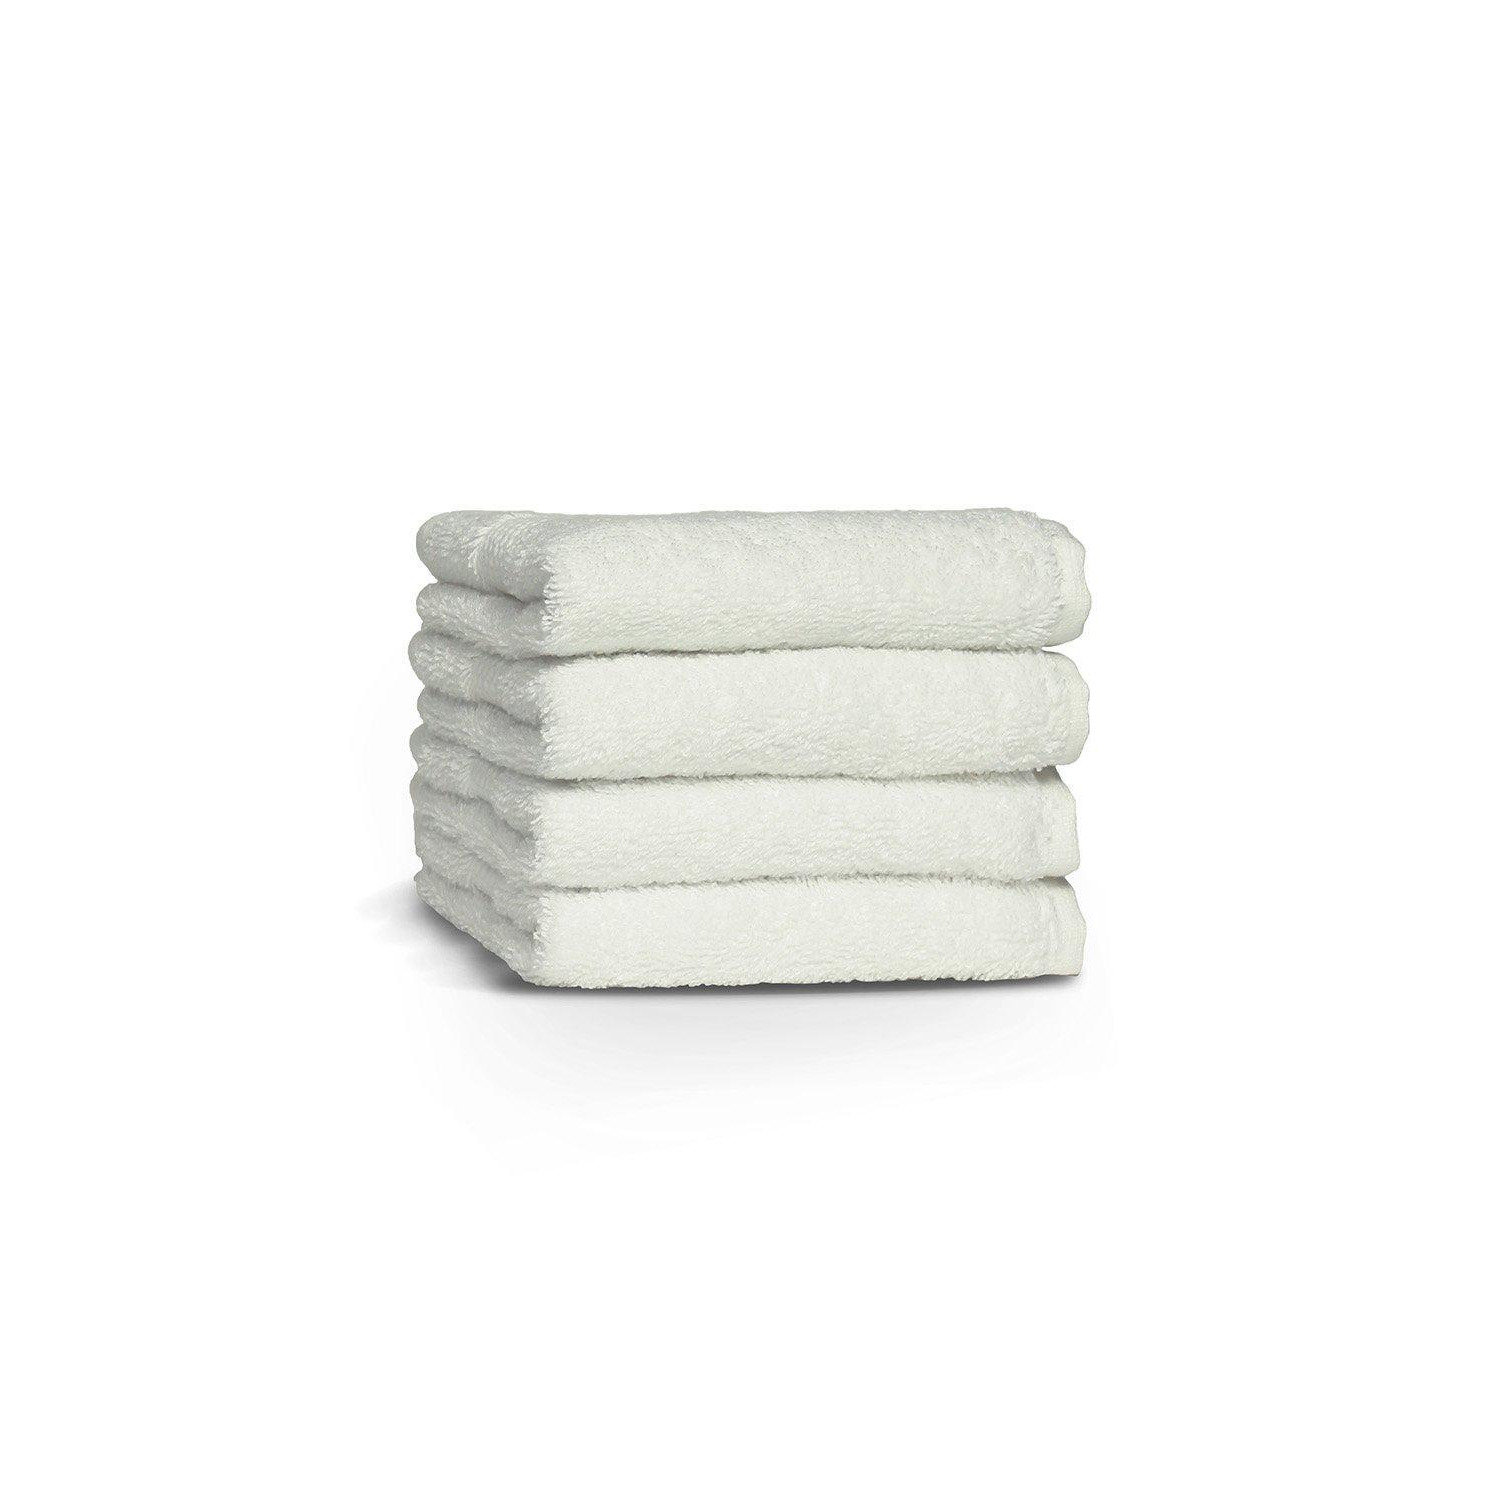 Loft Combed Cotton 4 Pack Face Cloths - image 1